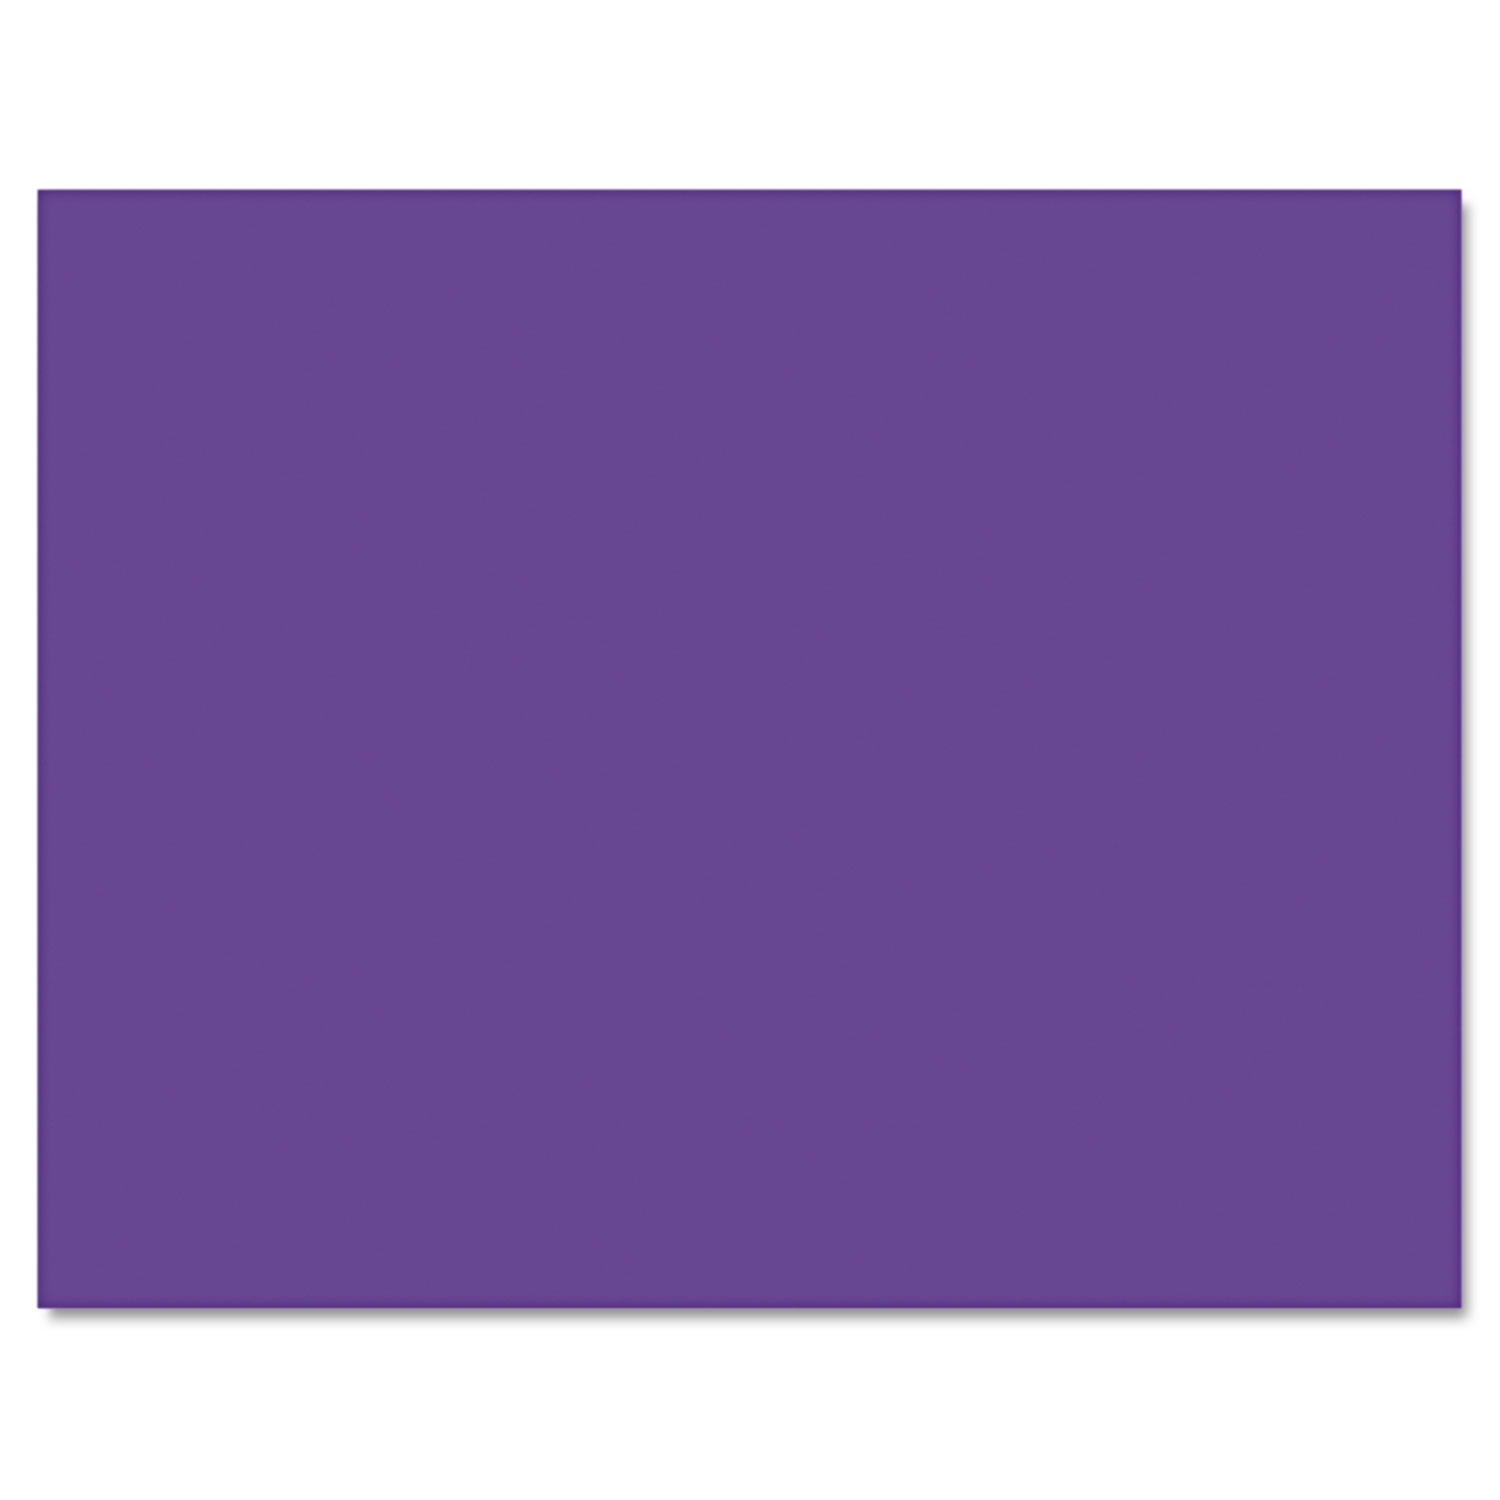  Pacon 5448-1 Four-Ply Railroad Board, 22 x 28, Purple, 25/Carton (PAC54481) 